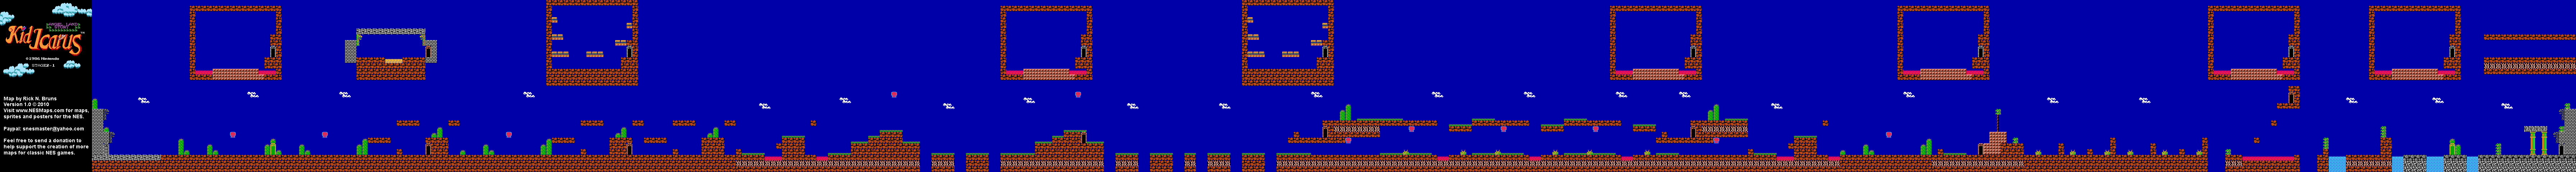 Kid Icarus - Stage 2-1 - NES Map BG